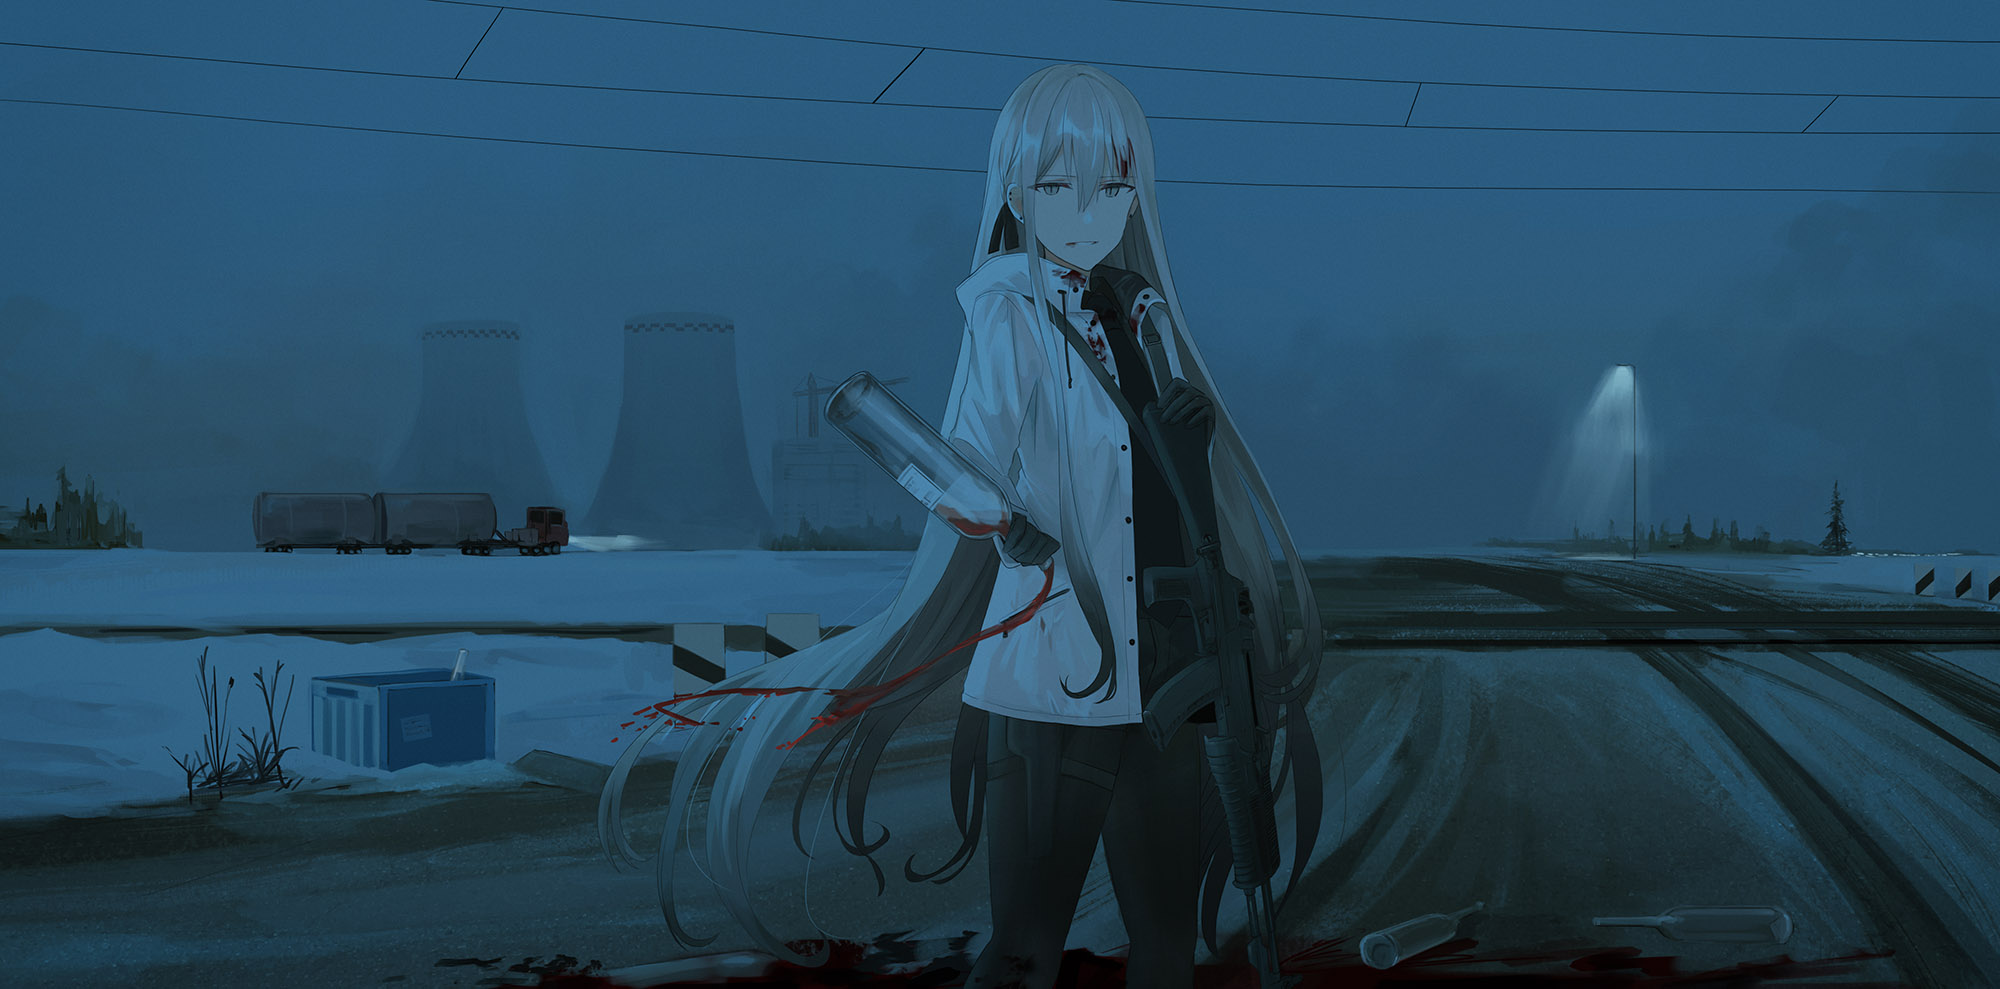 Anime Girls Anime Blonde Long Hair Bottles Dark Nuclear Power Plant Weapon Road 2000x989